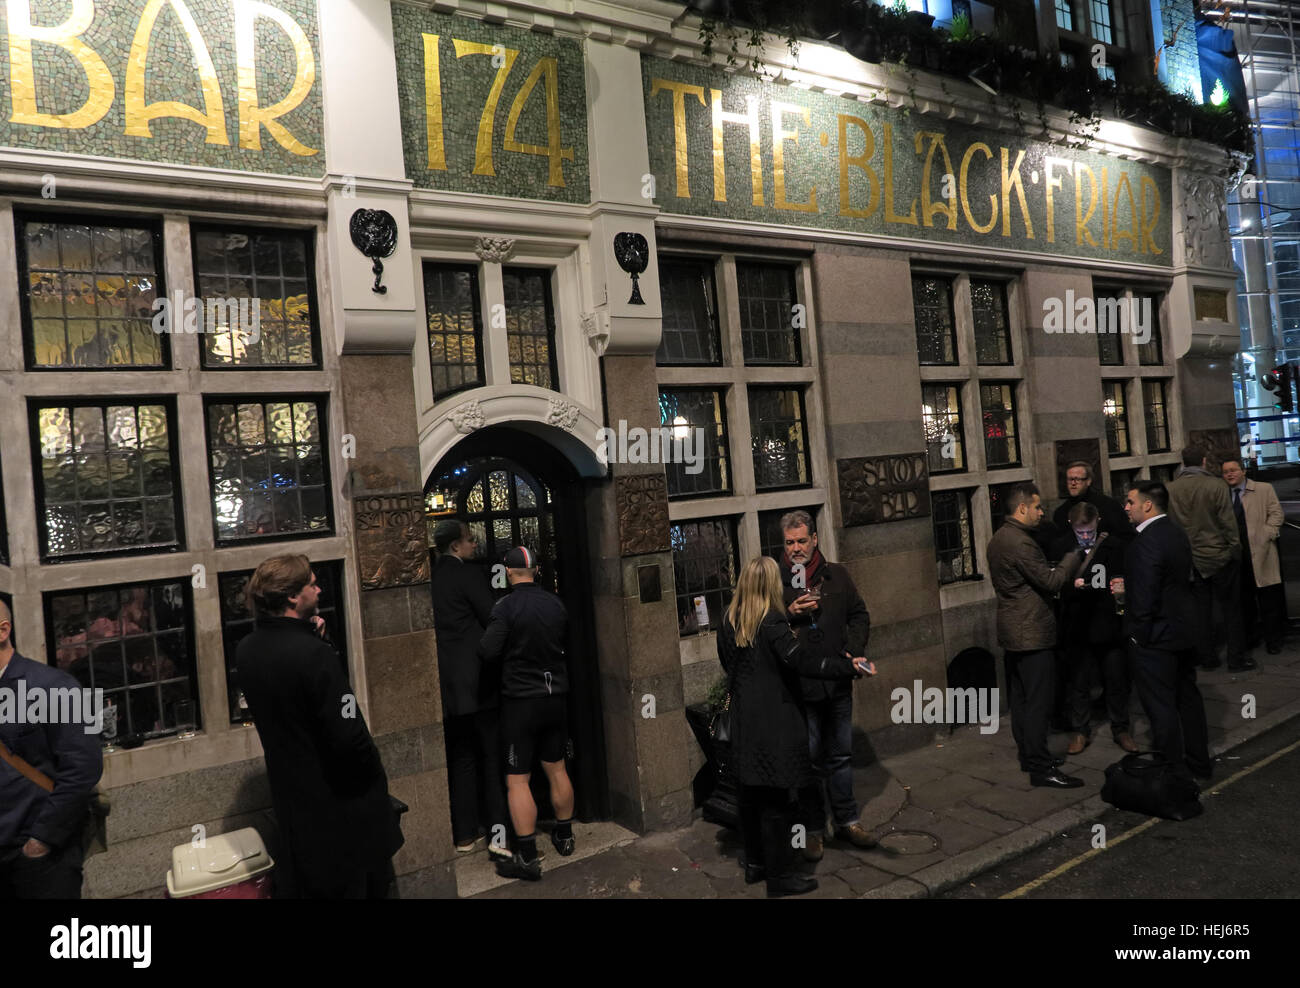 Le frère noir, Blackfriars, London, England, UK at night Banque D'Images